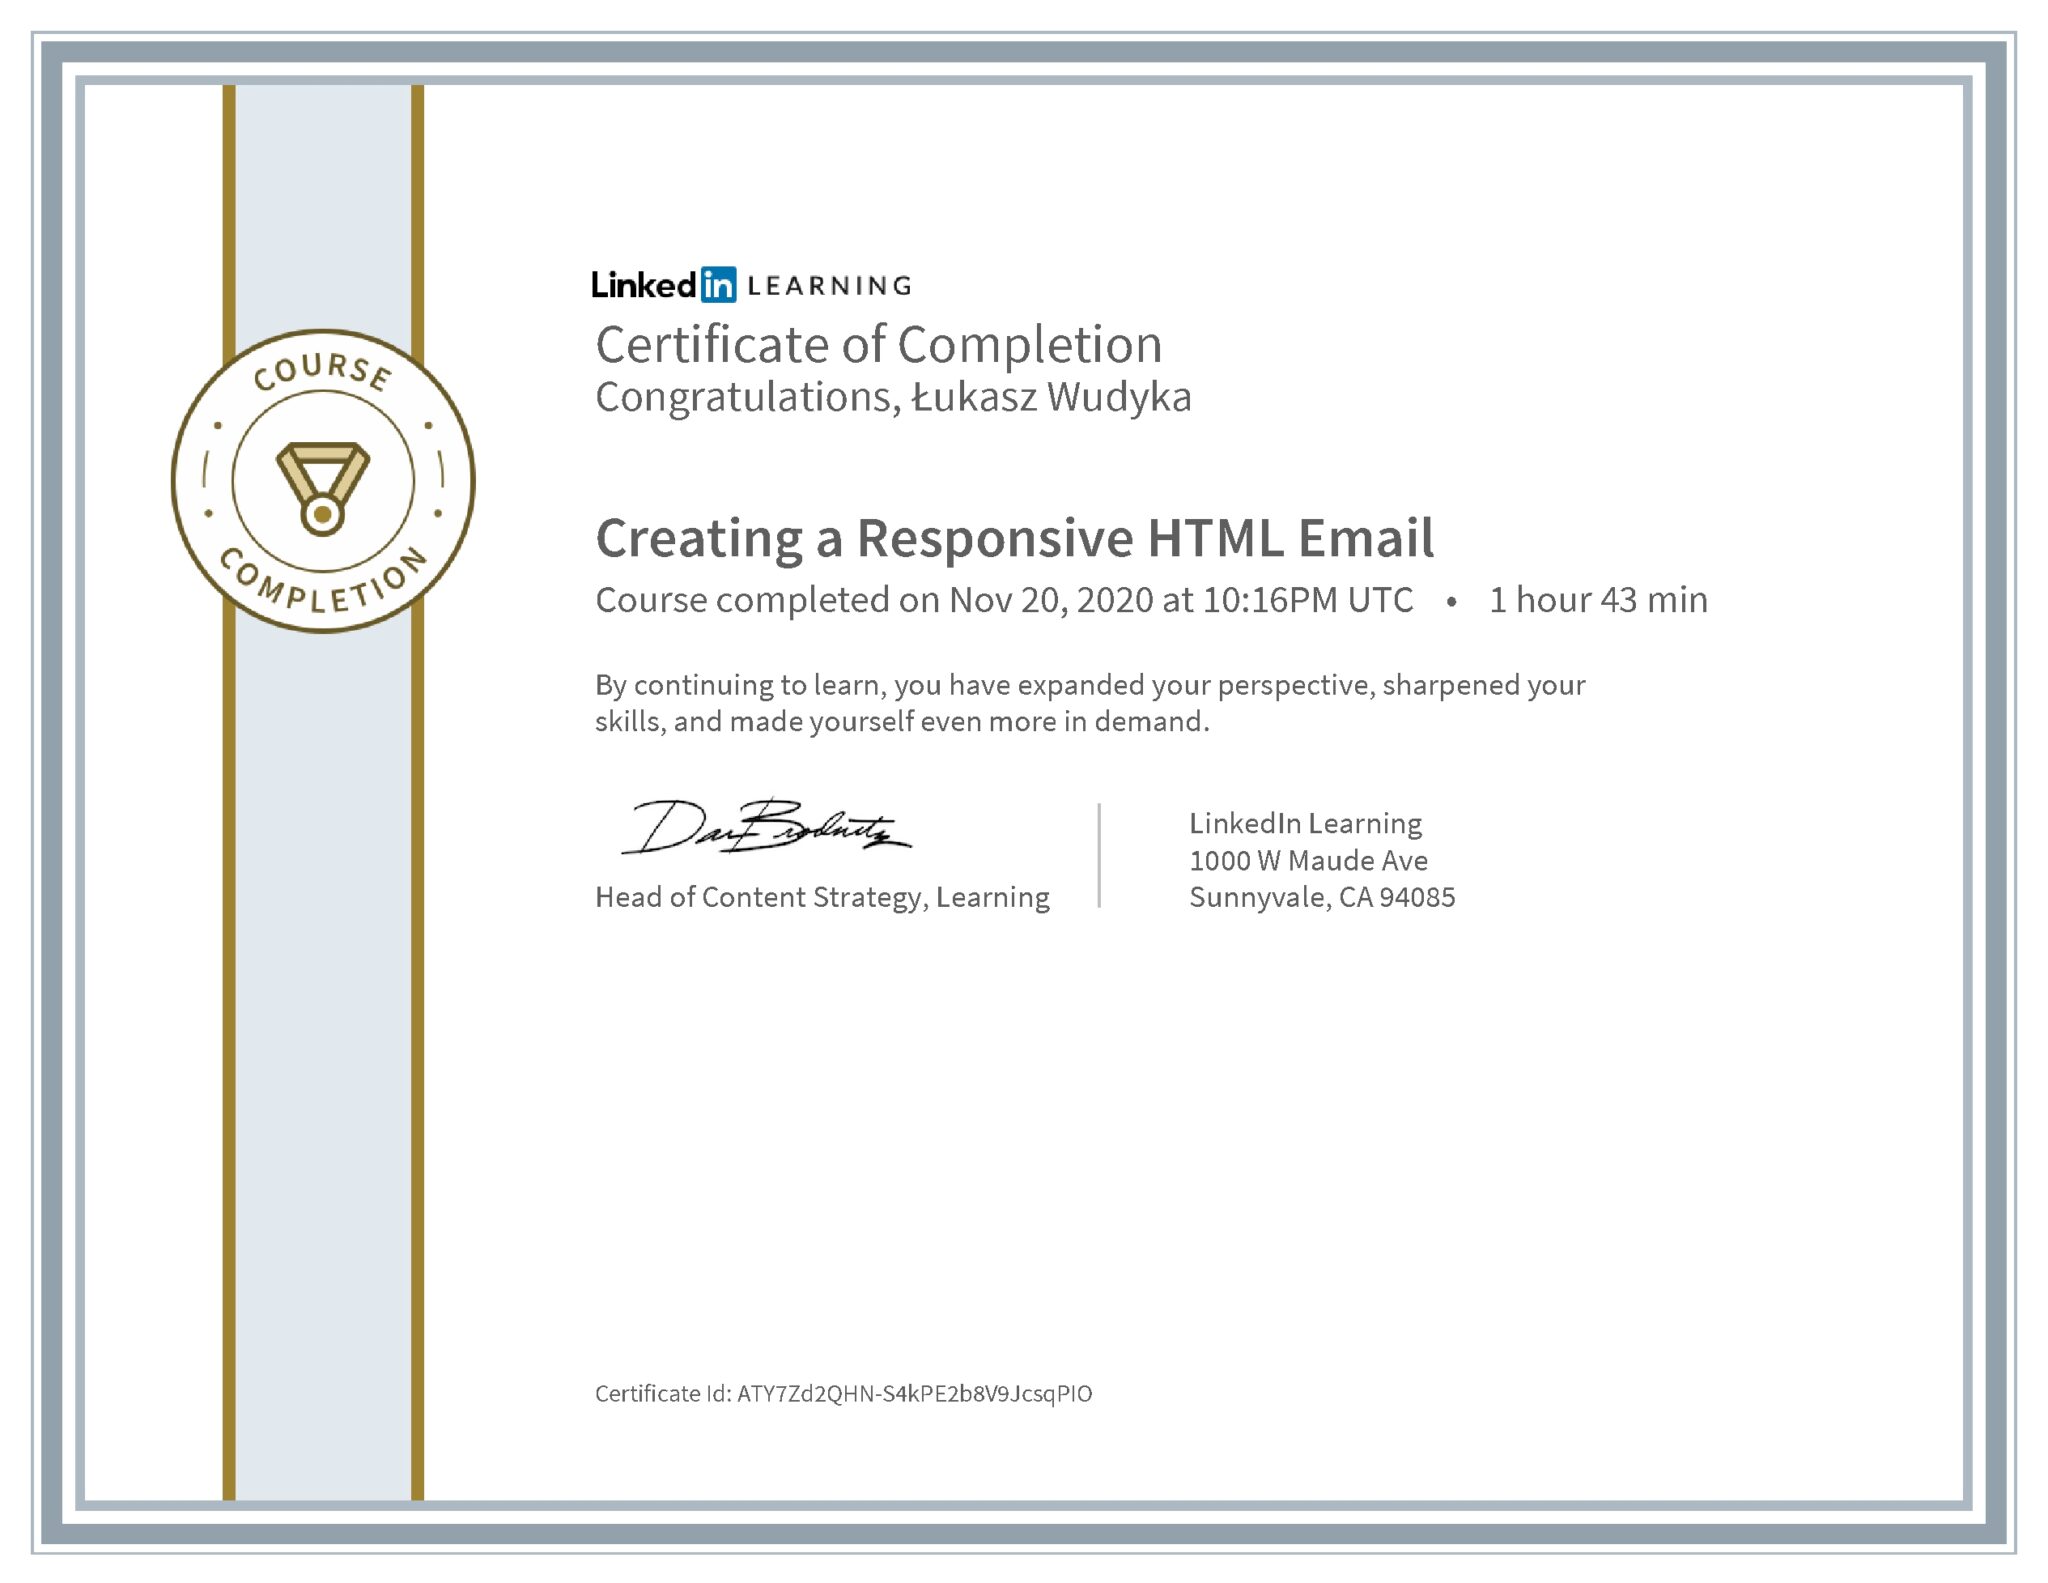 Łukasz Wudyka certyfikat LinkedIn Creating a Responsive HTML Email